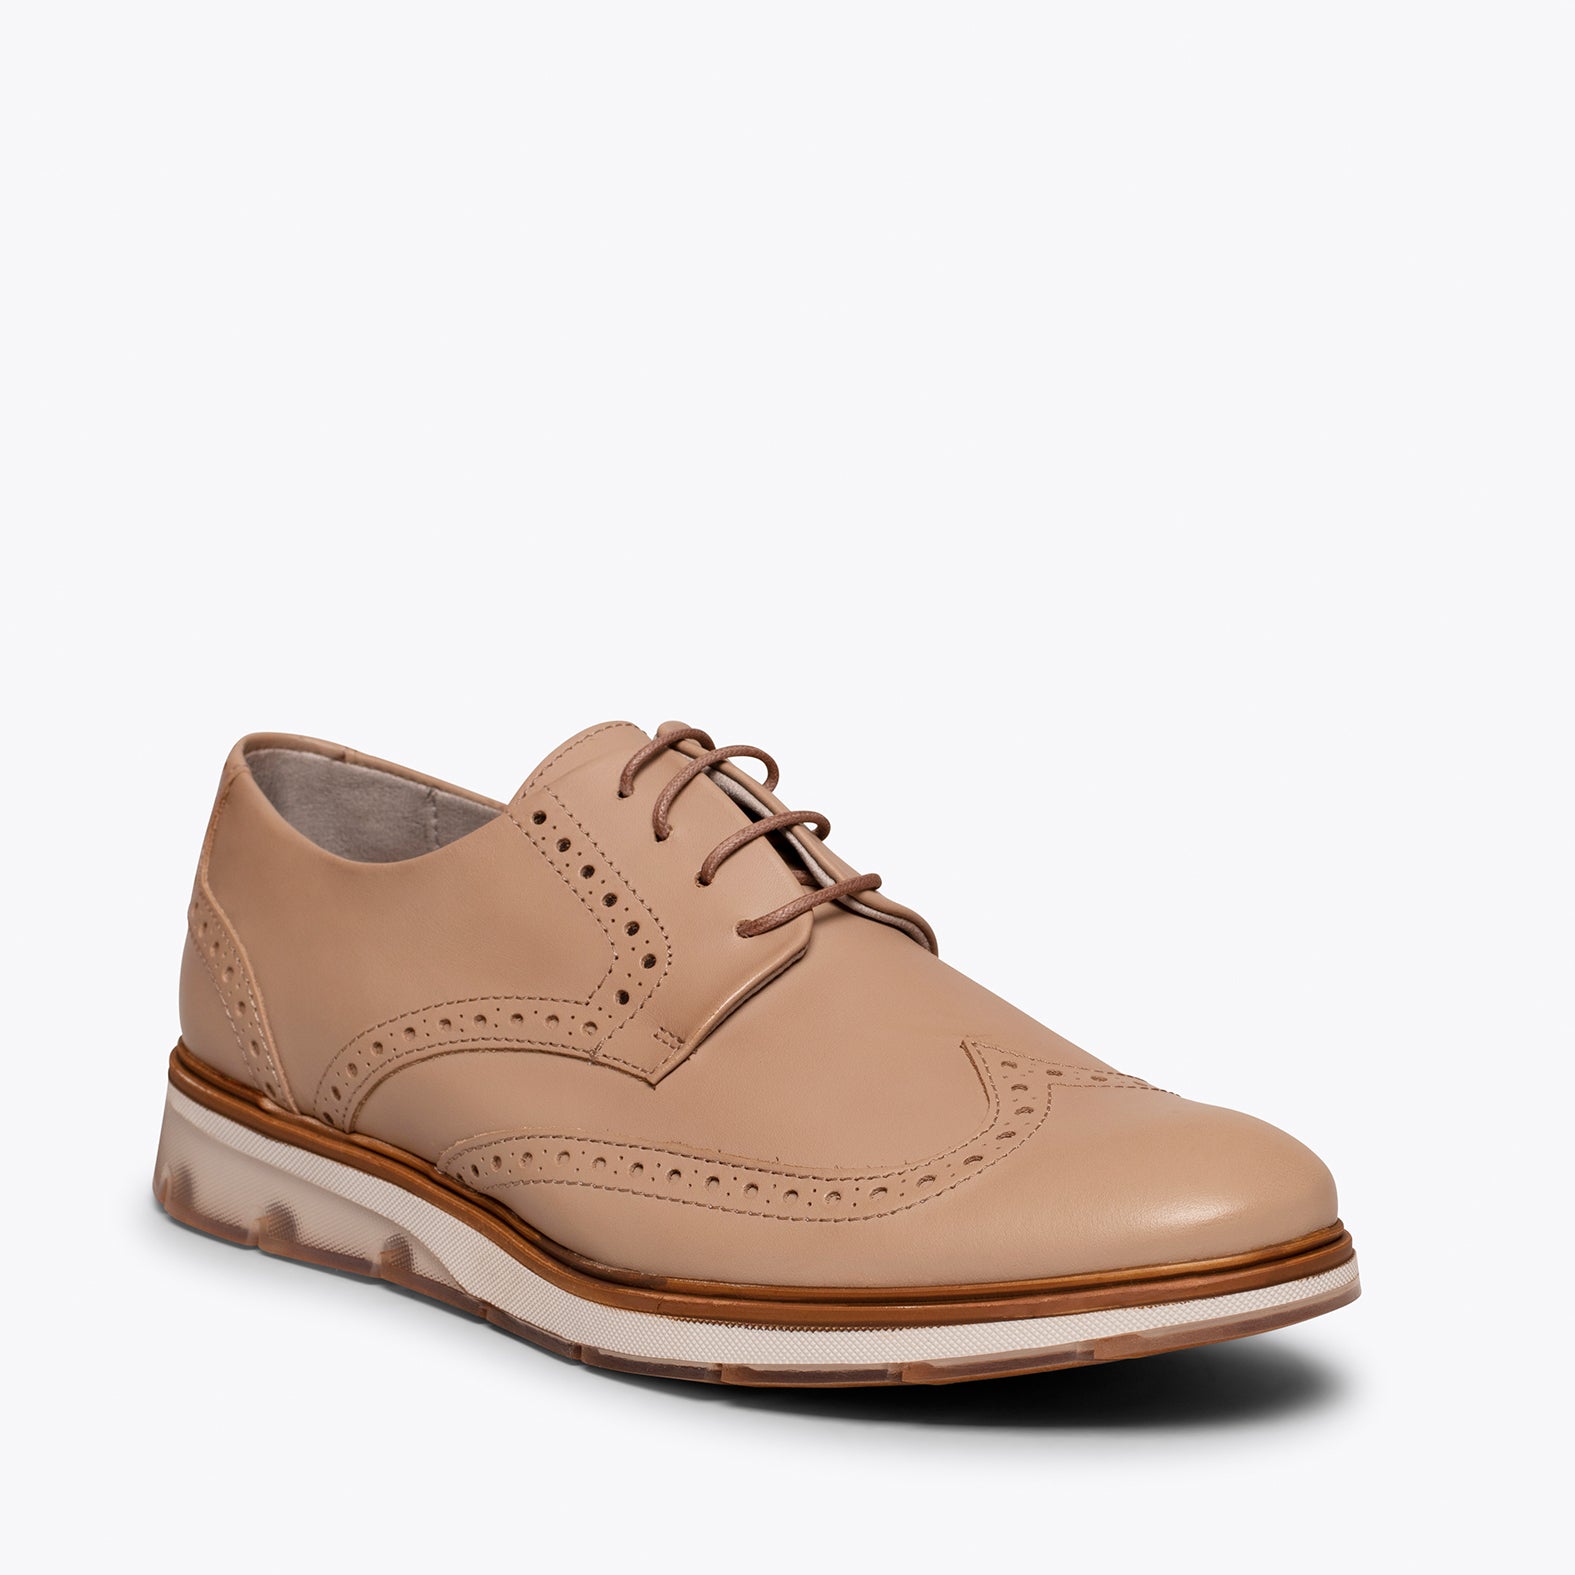 OXFORD - Chaussures à lacets pour homme avec coupe anglaise TAUPE